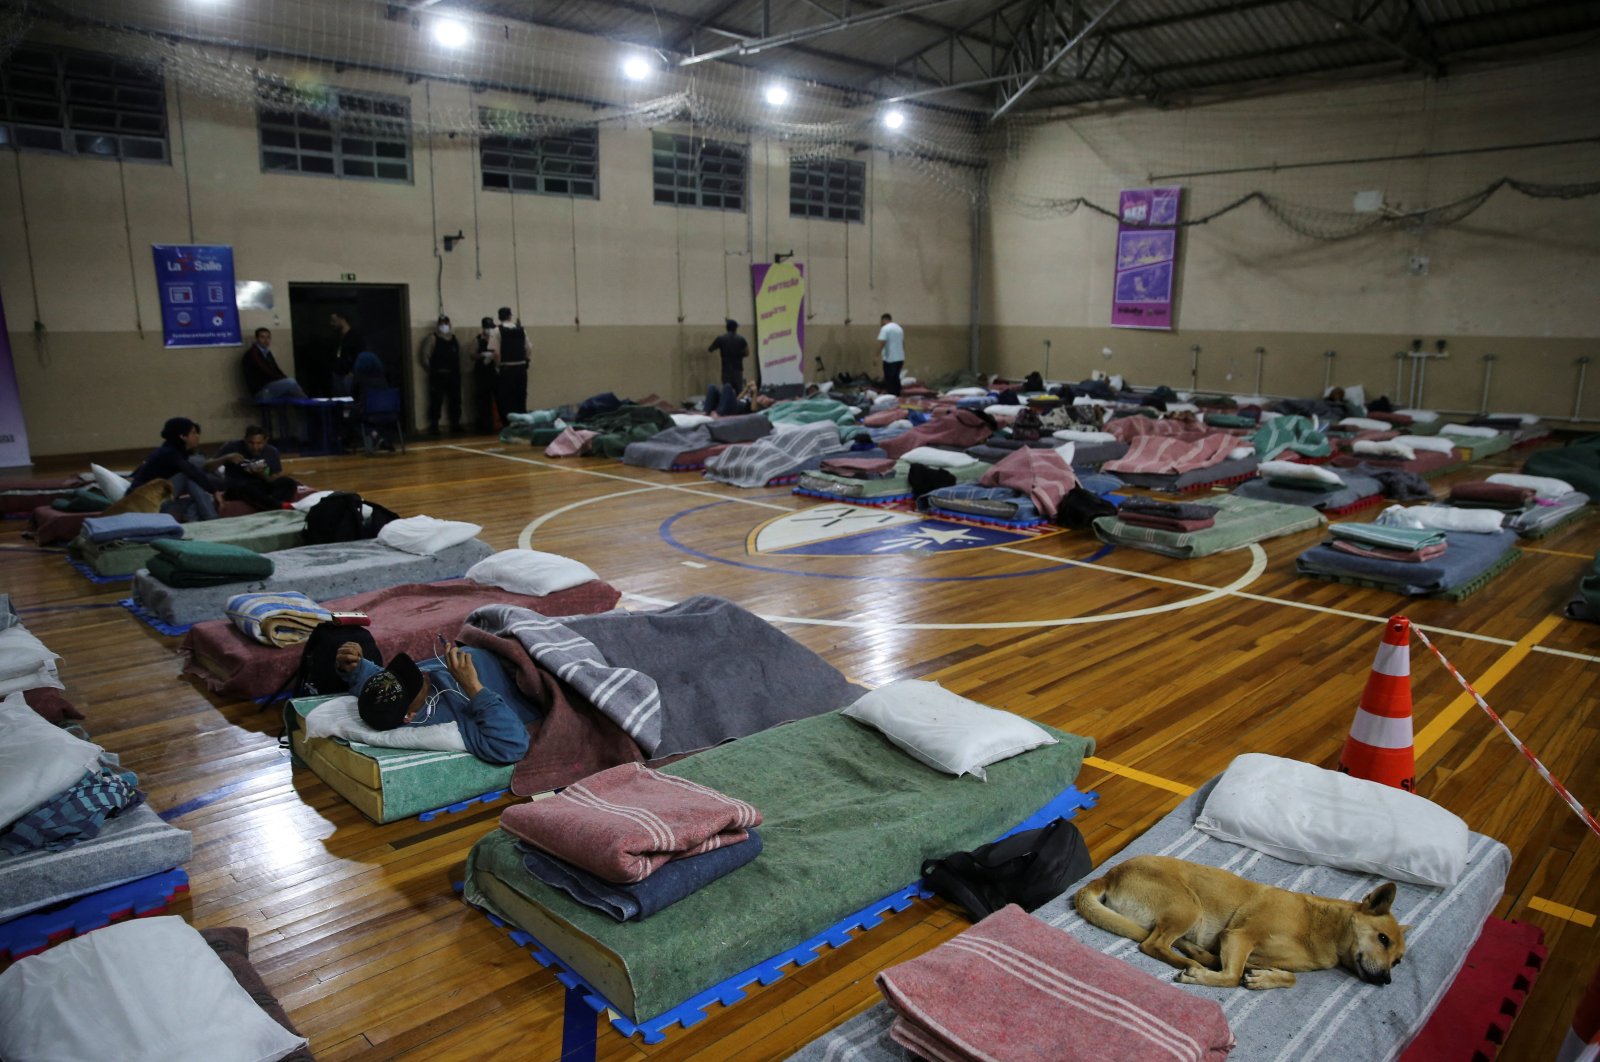 Tempat tidur untuk hewan peliharaan: Tunawisma mendapatkan insentif untuk pergi ke tempat perlindungan di Brasil